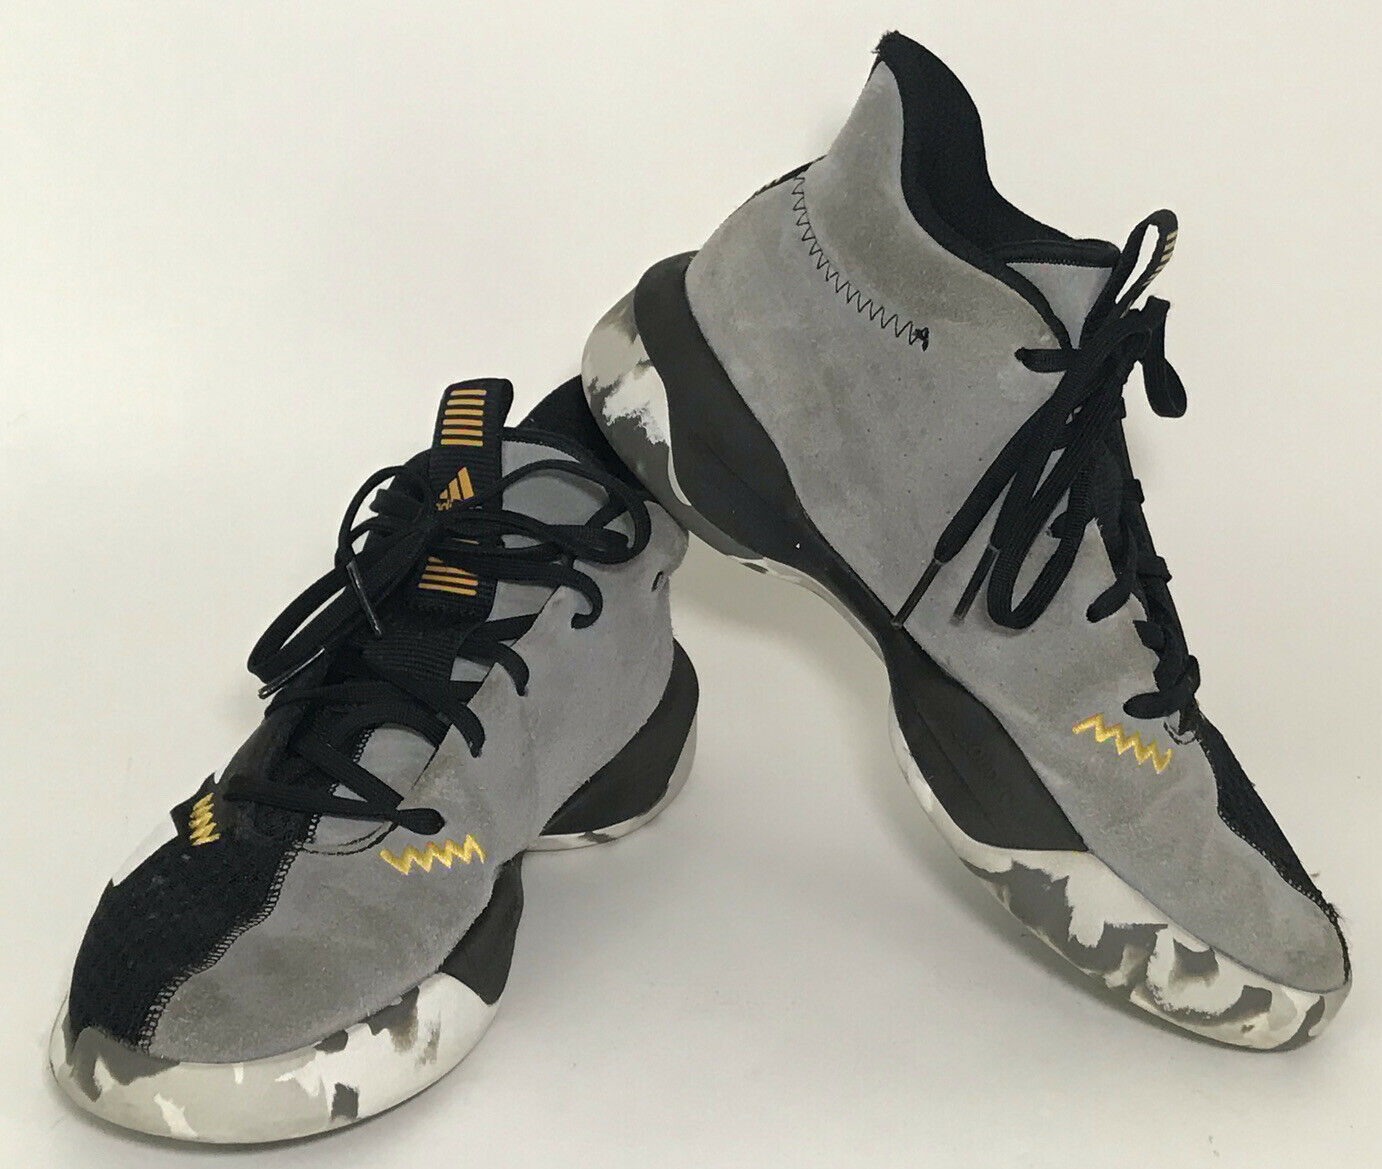 Adidas Pro Next 2019 Kid Youth Size 6 Basketball Shoes Black/Gray Lace Up F97305